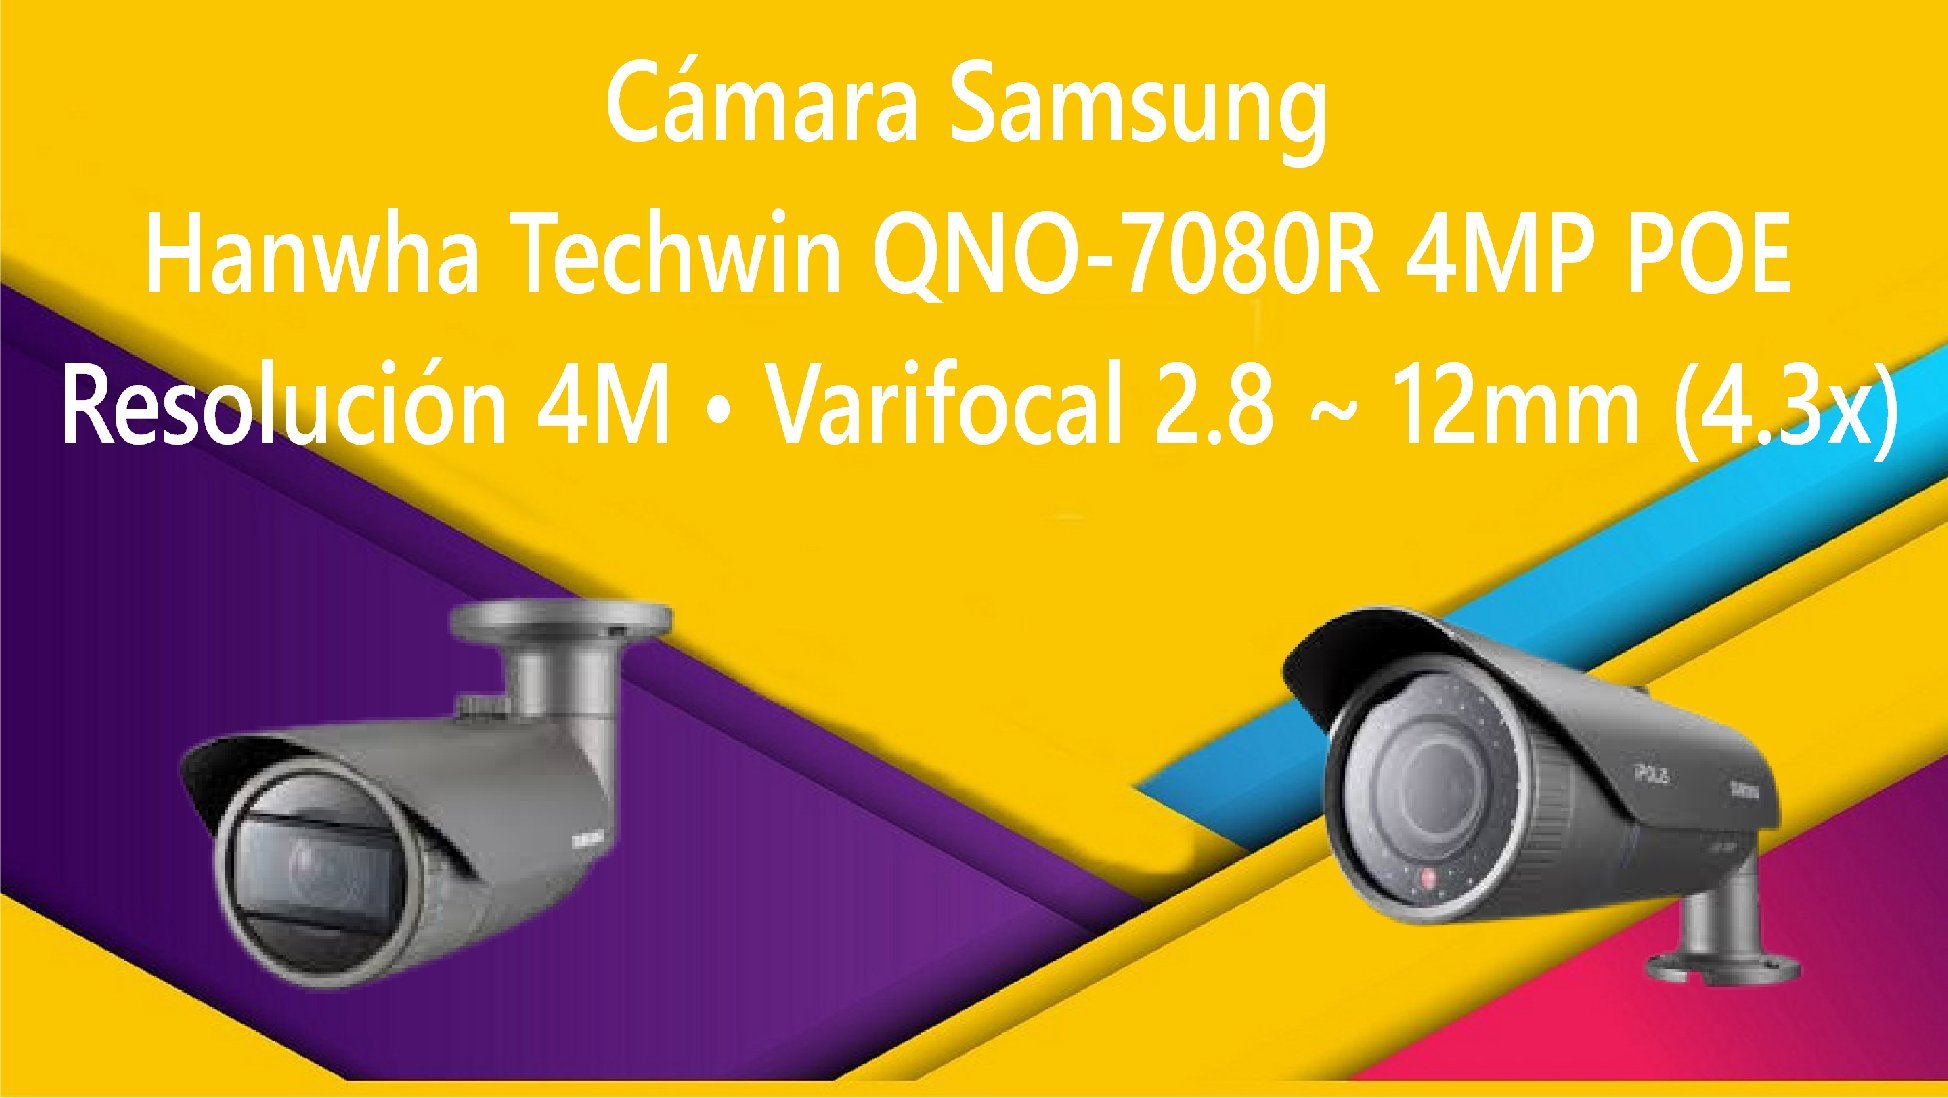 Samsung Hanwha Techwin QNO-7080R 4MP POE